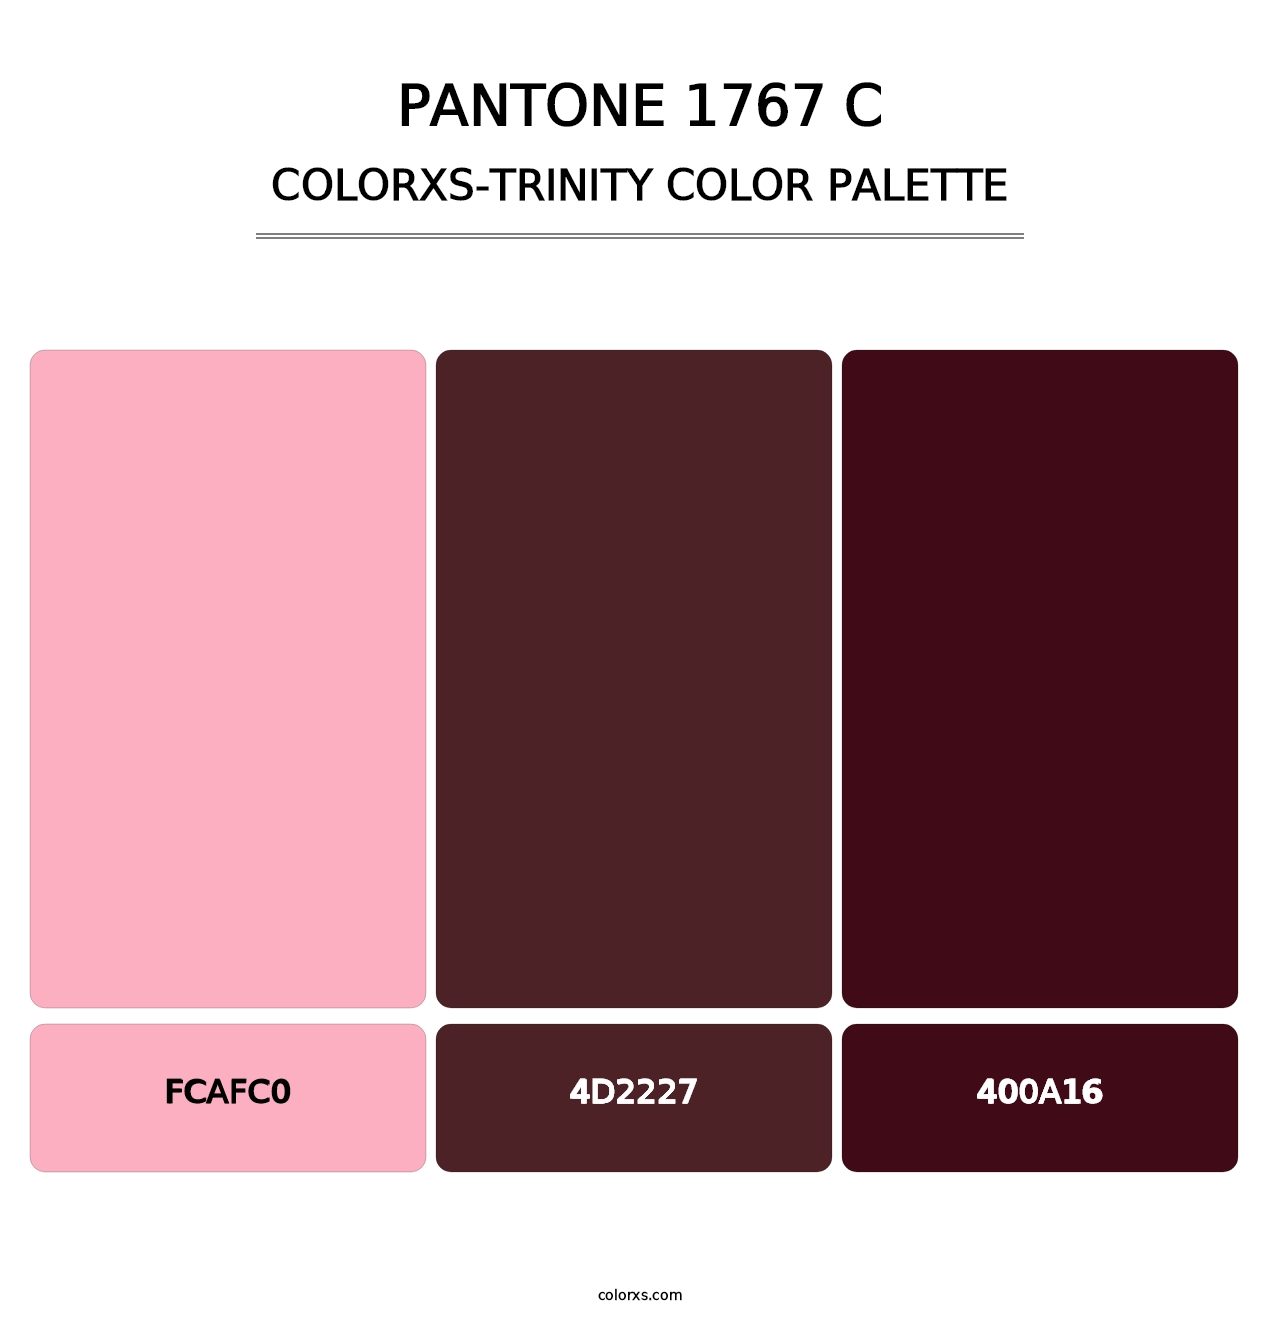 PANTONE 1767 C - Colorxs Trinity Palette